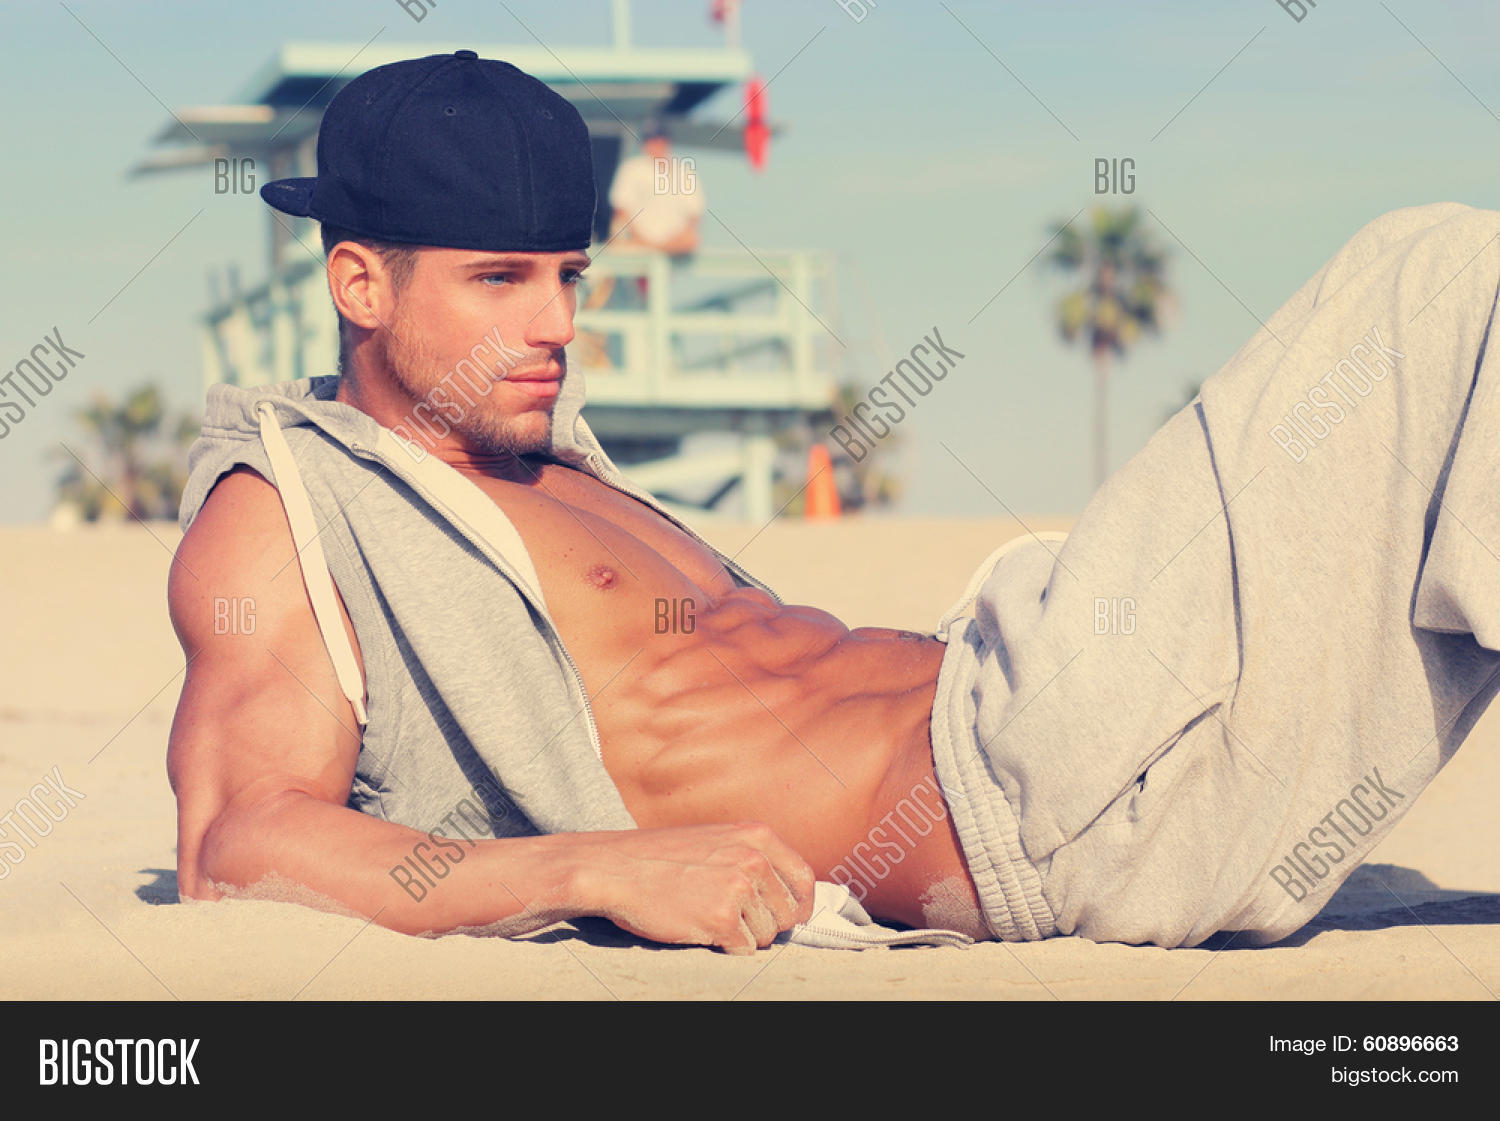 anthony harewood share hot guy on beach photos